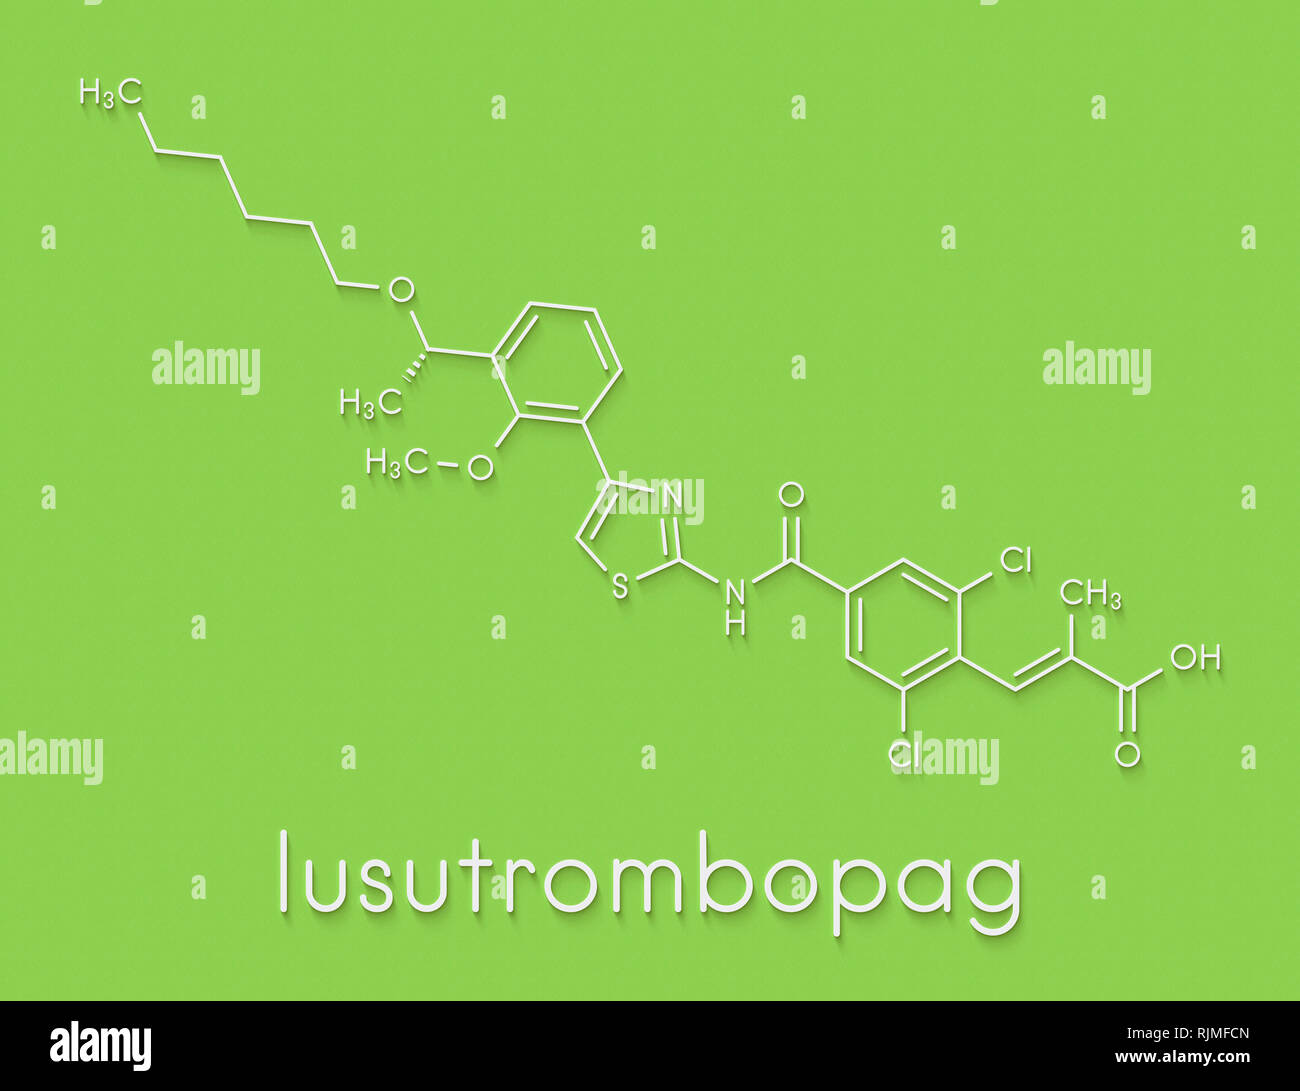 Lusutrombopag Droge Molekül (thrombopoietin Rezeptor Agonist). Skelettmuskulatur Formel. Stockfoto